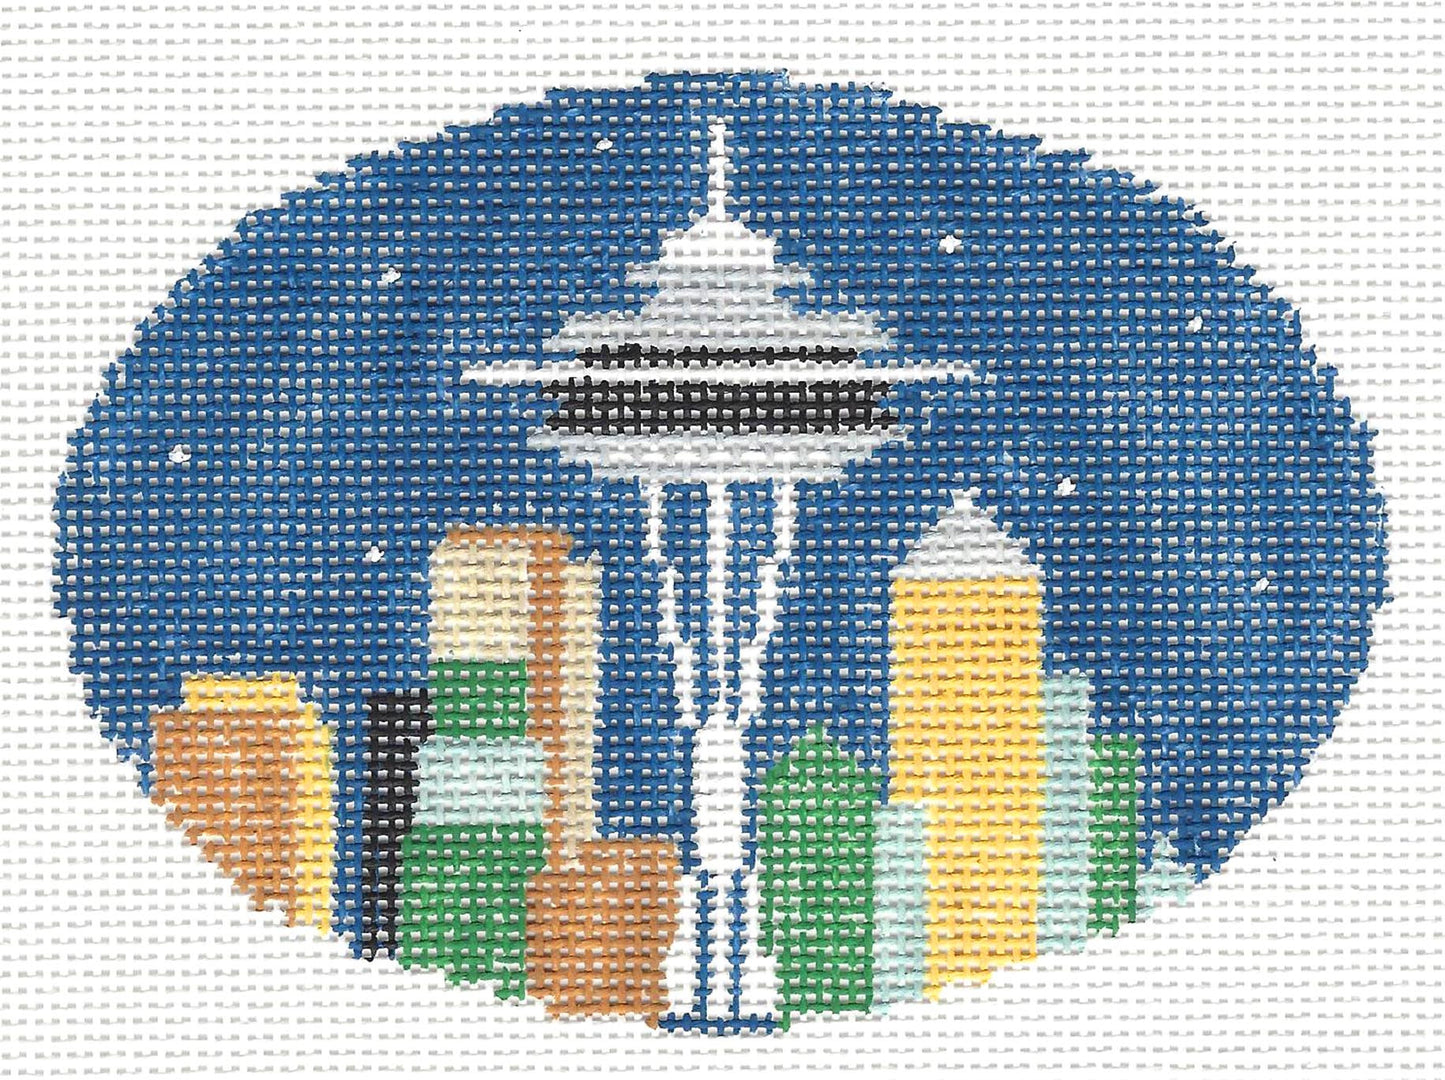 Travel canvas ~ Space Needle in Seattle, Washington handpainted Needlepoint Canvas by Kathy Schenkel